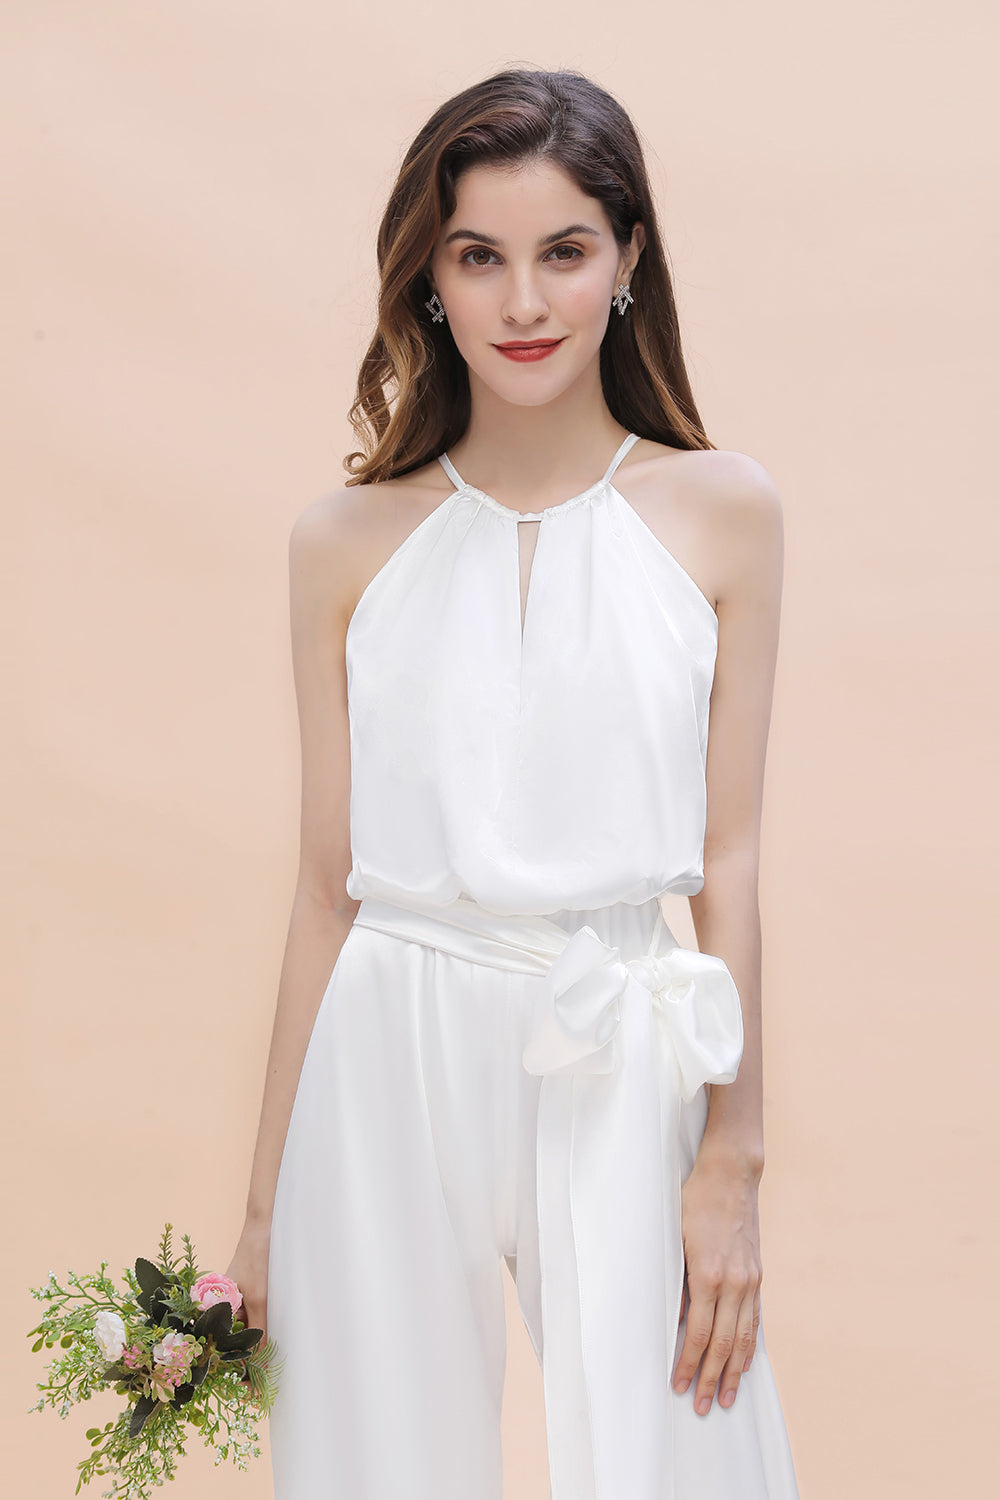 Affordable Halter Sleeveless Ivory Charmeuse Bridesmaid Jumpsuit Online